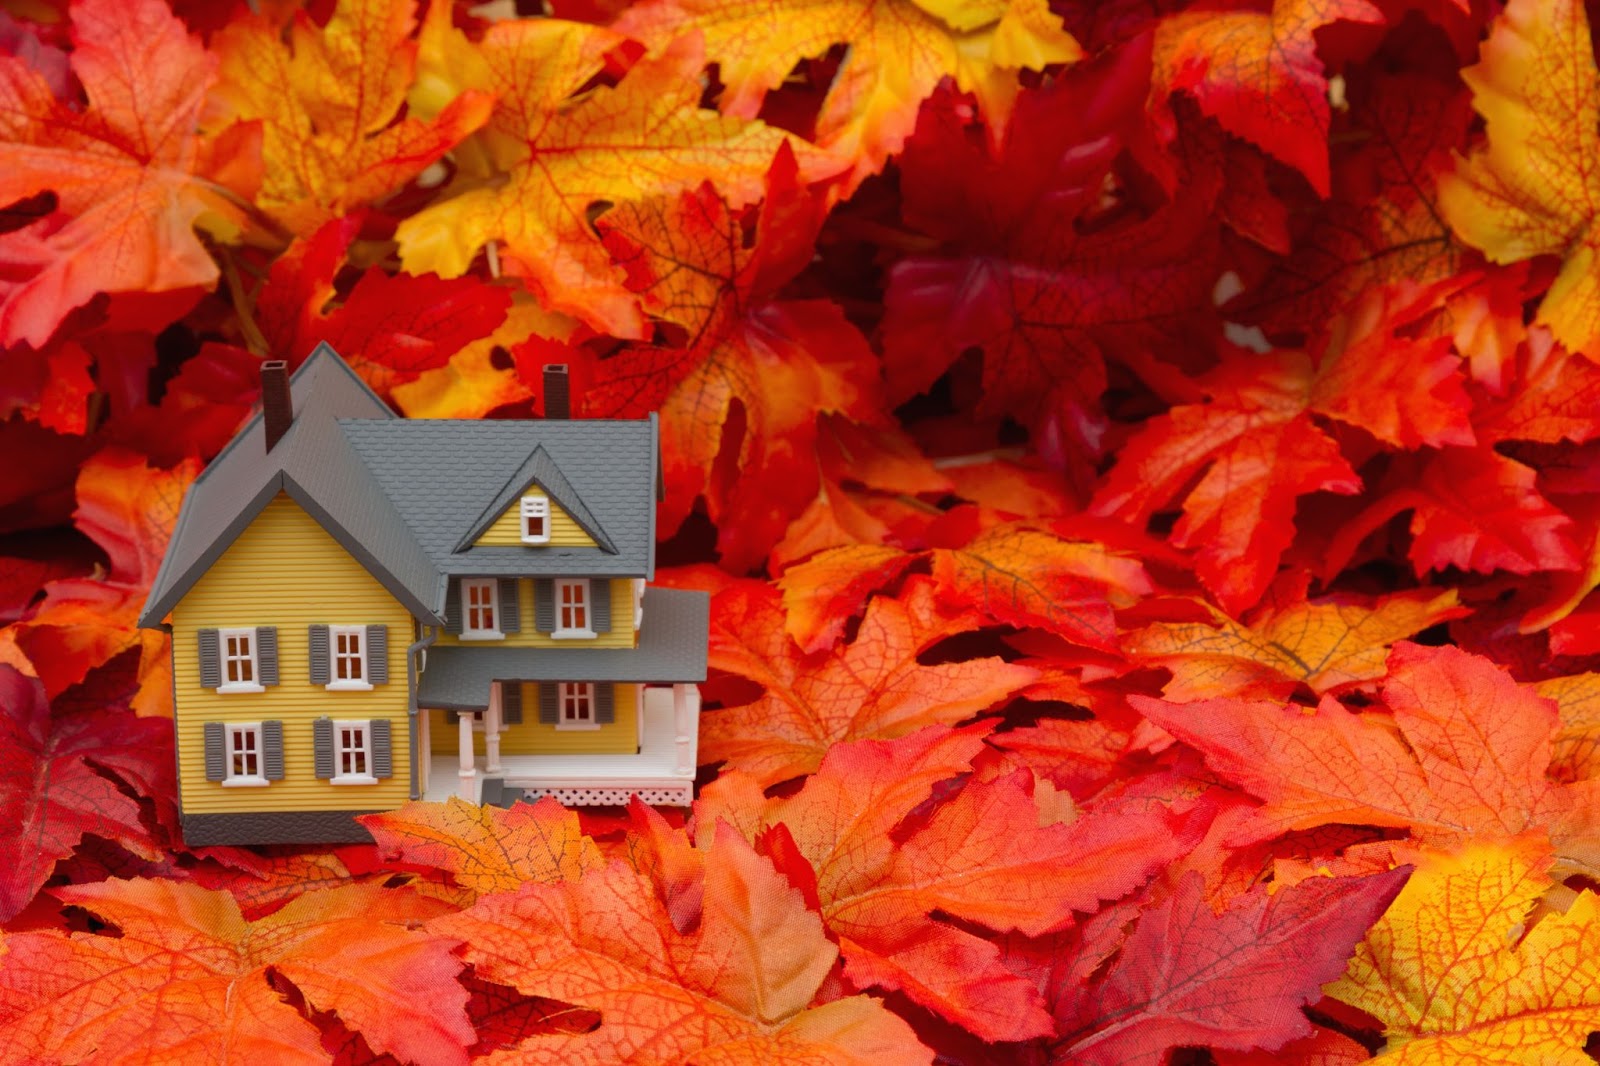 Miniature house sitting on fall leaves.